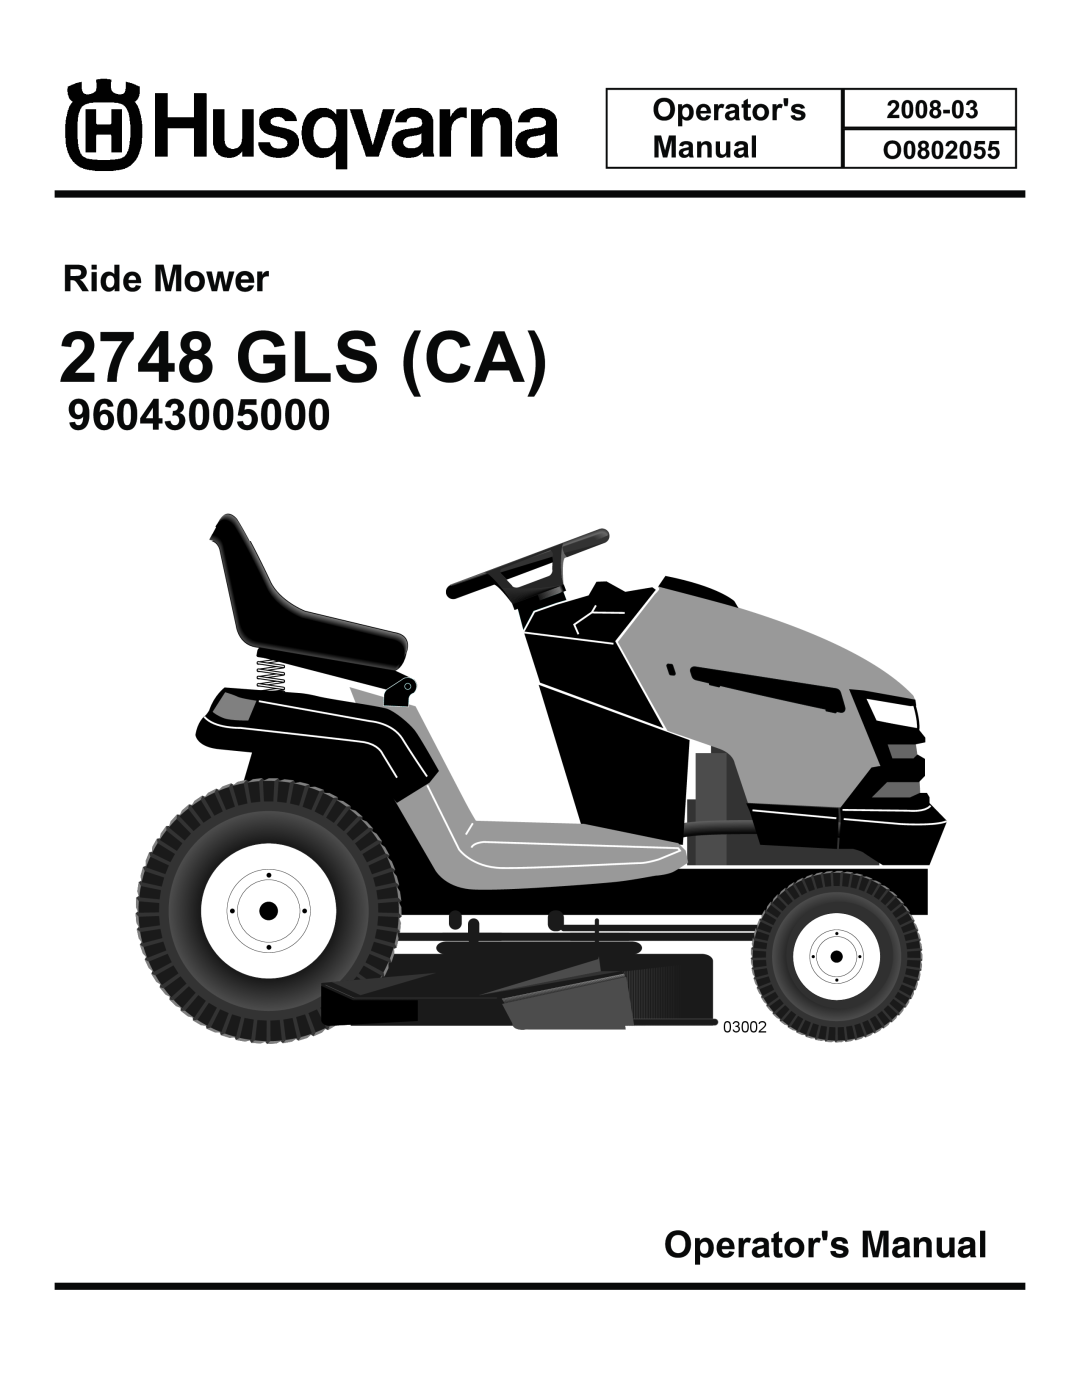 Husqvarna 2748 GLS (CA) manual Gls Ca, 96043005000, Ride Mower, Operators Manual, 2008-03 O0802055 